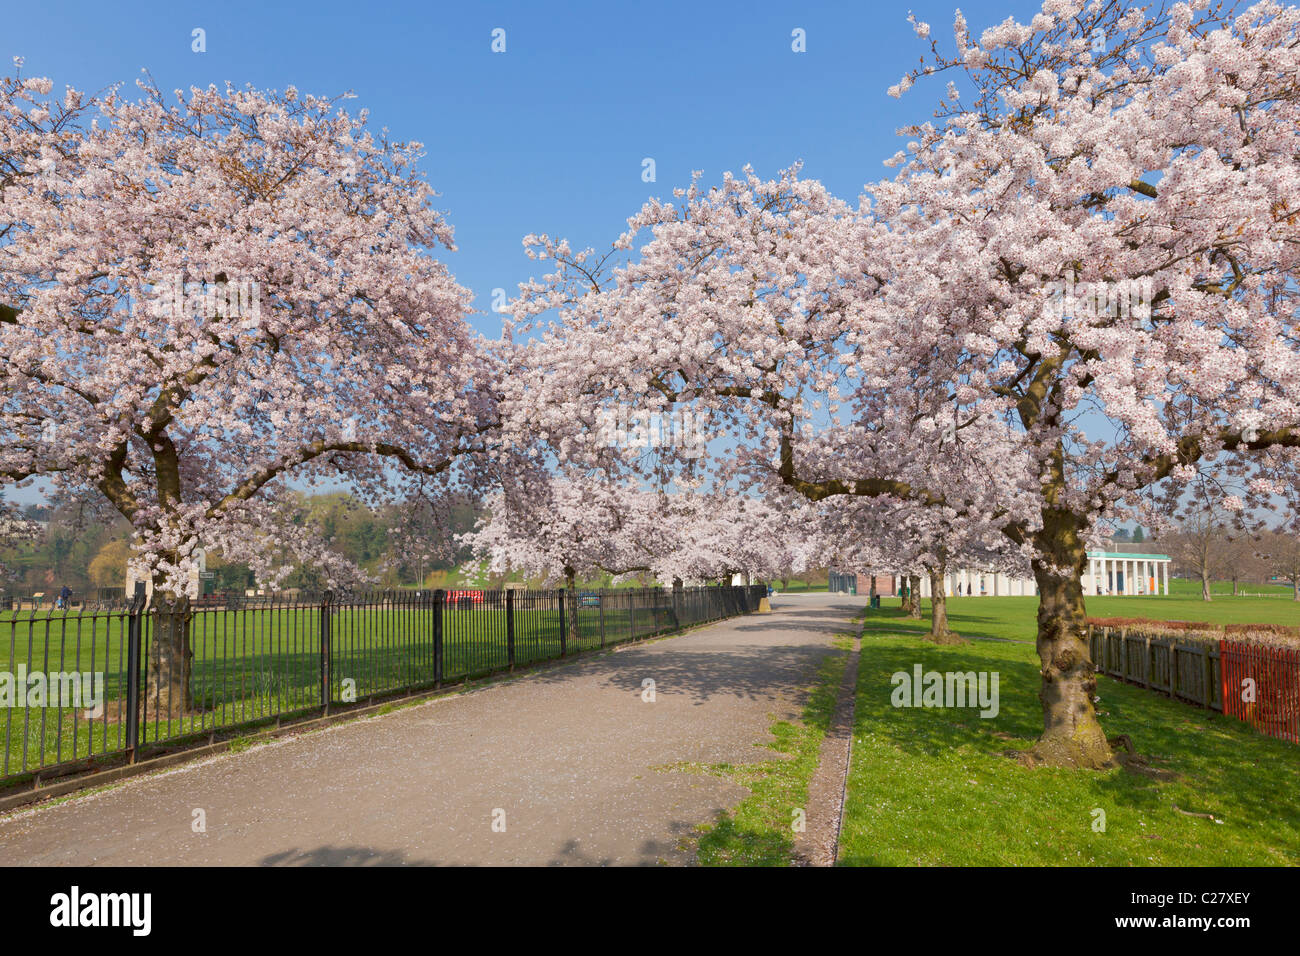 Cherry blossom on trees in Nottingham University park campus Nottingham Nottinghamshire England GB UK EU Europe Stock Photo